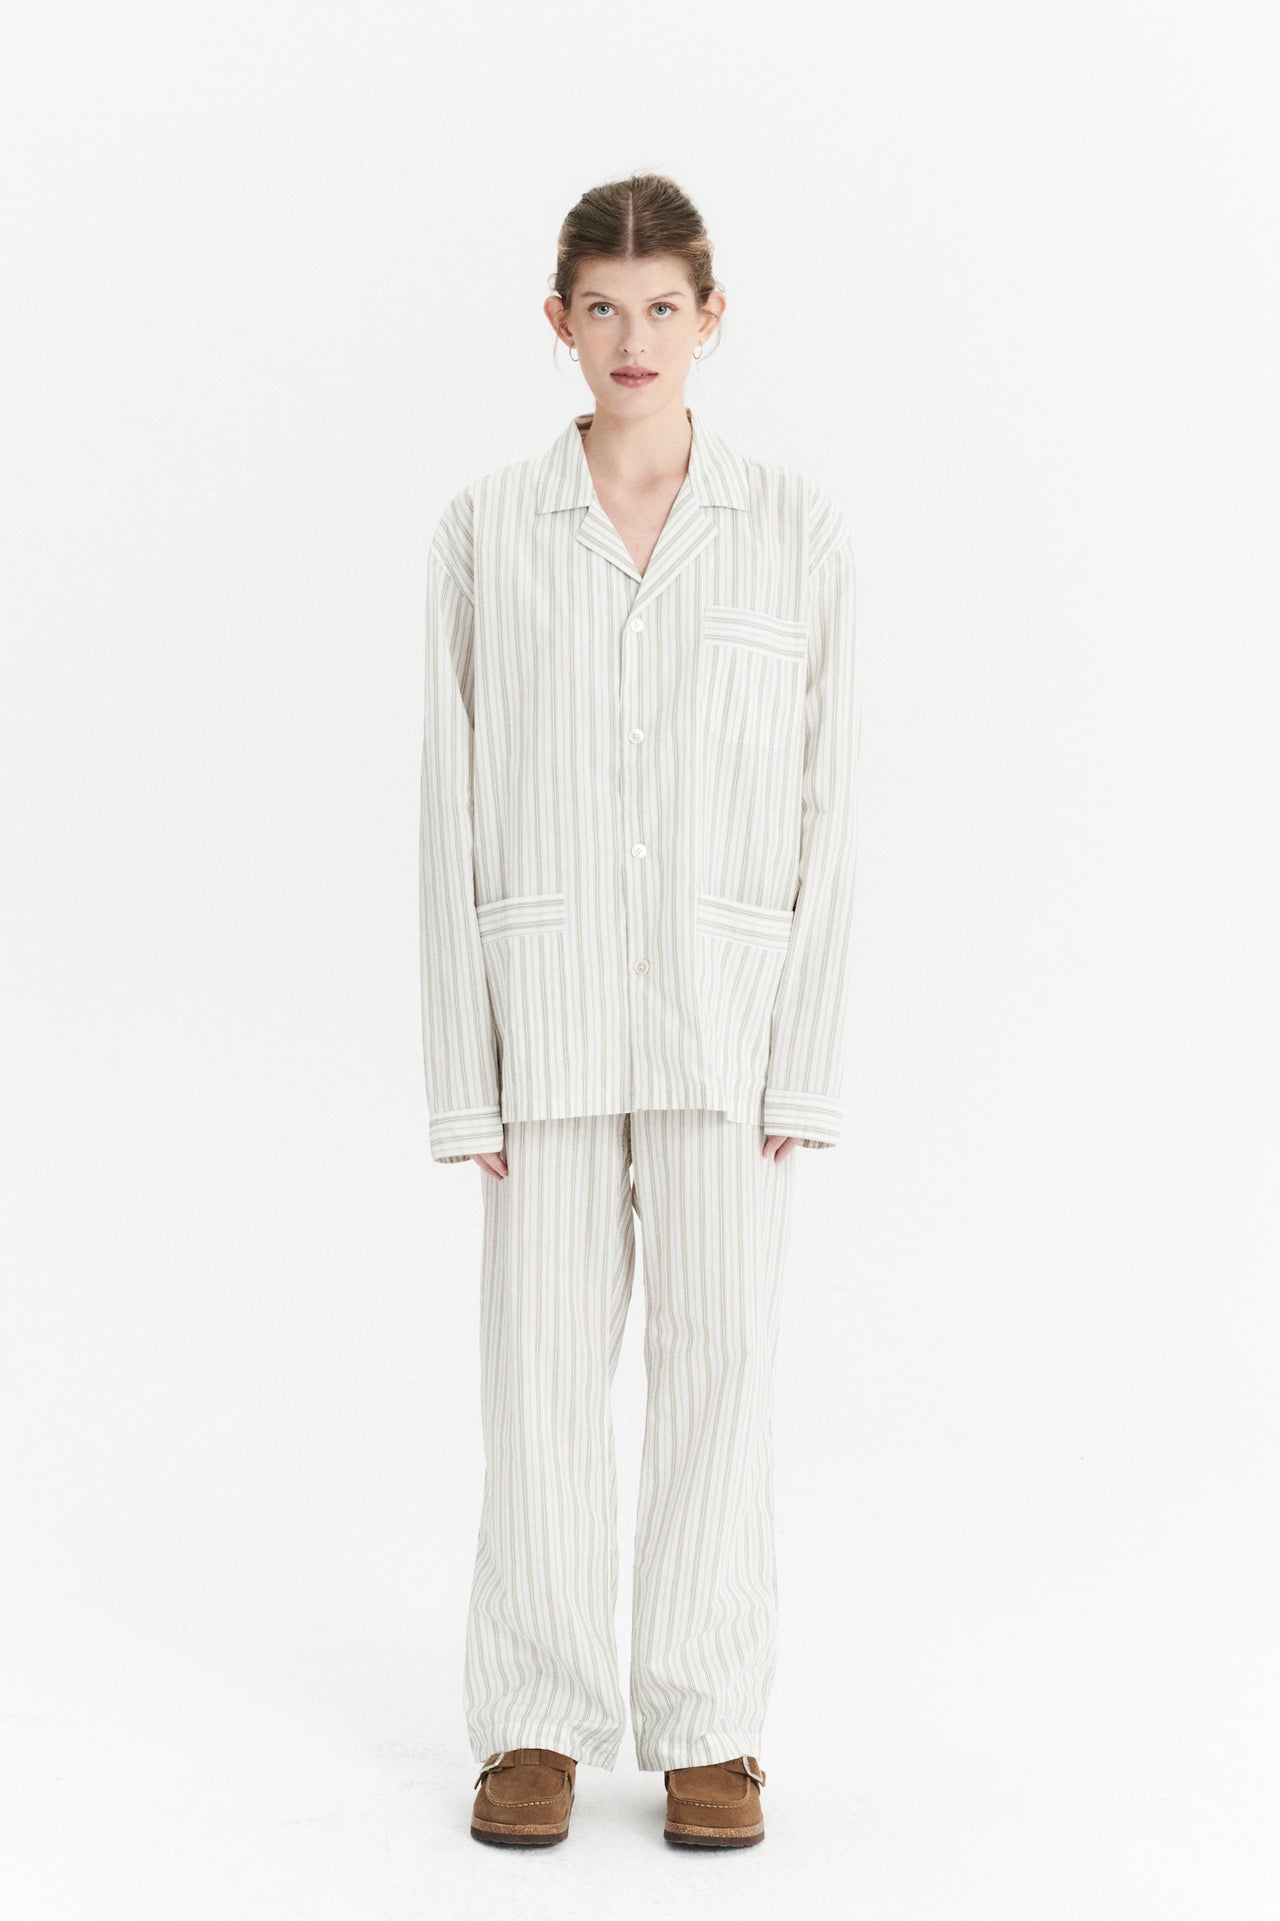 Unisex Pyjama Shirt in a Cream and Beige Striped Excellent Italian Cotton